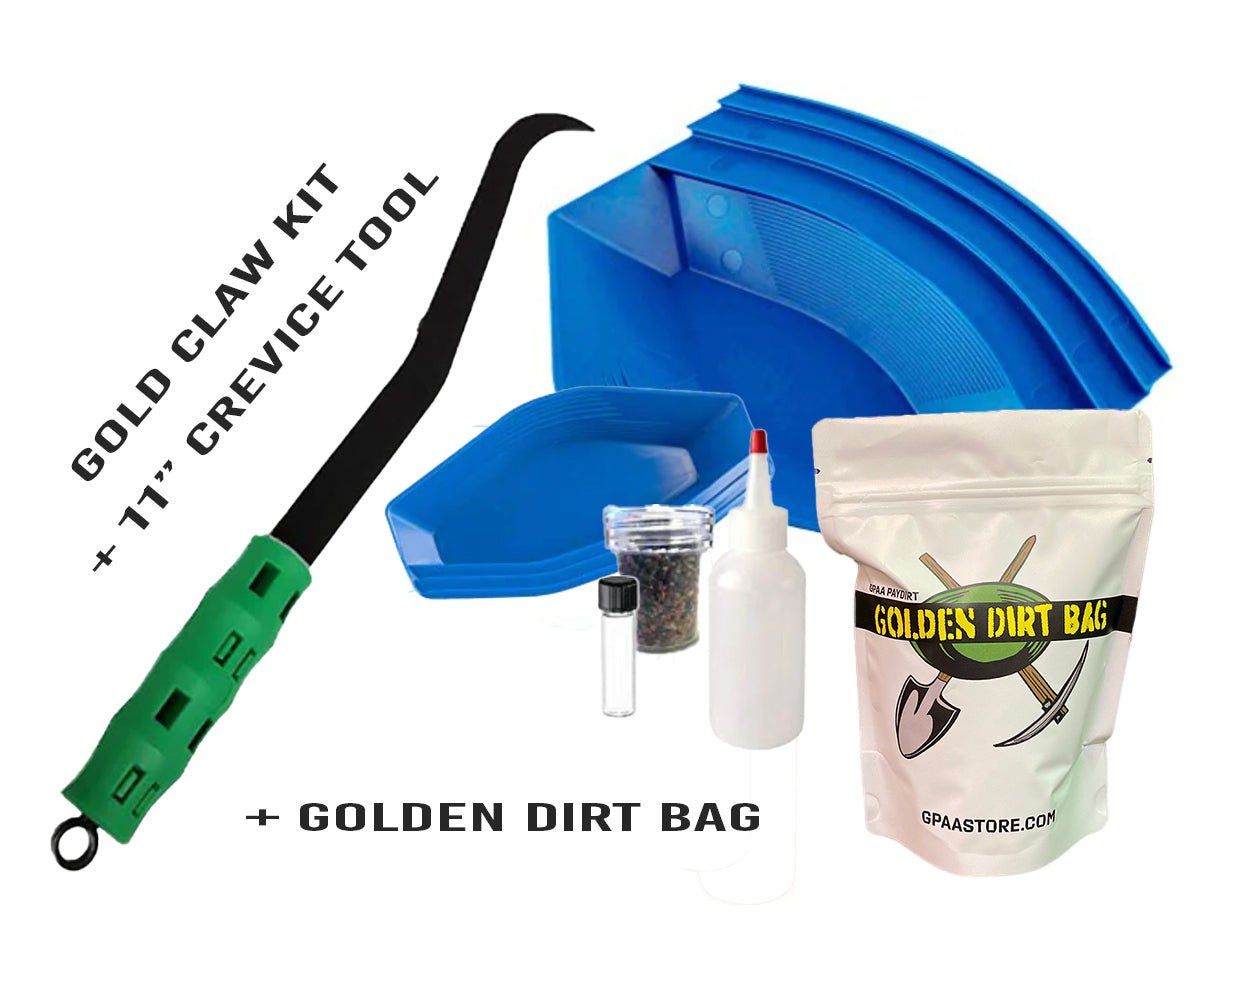 Gold Claw Panning Kit, 11" Crevicer Tool, Golden Dirt Bag - Gold Prospectors Association of America